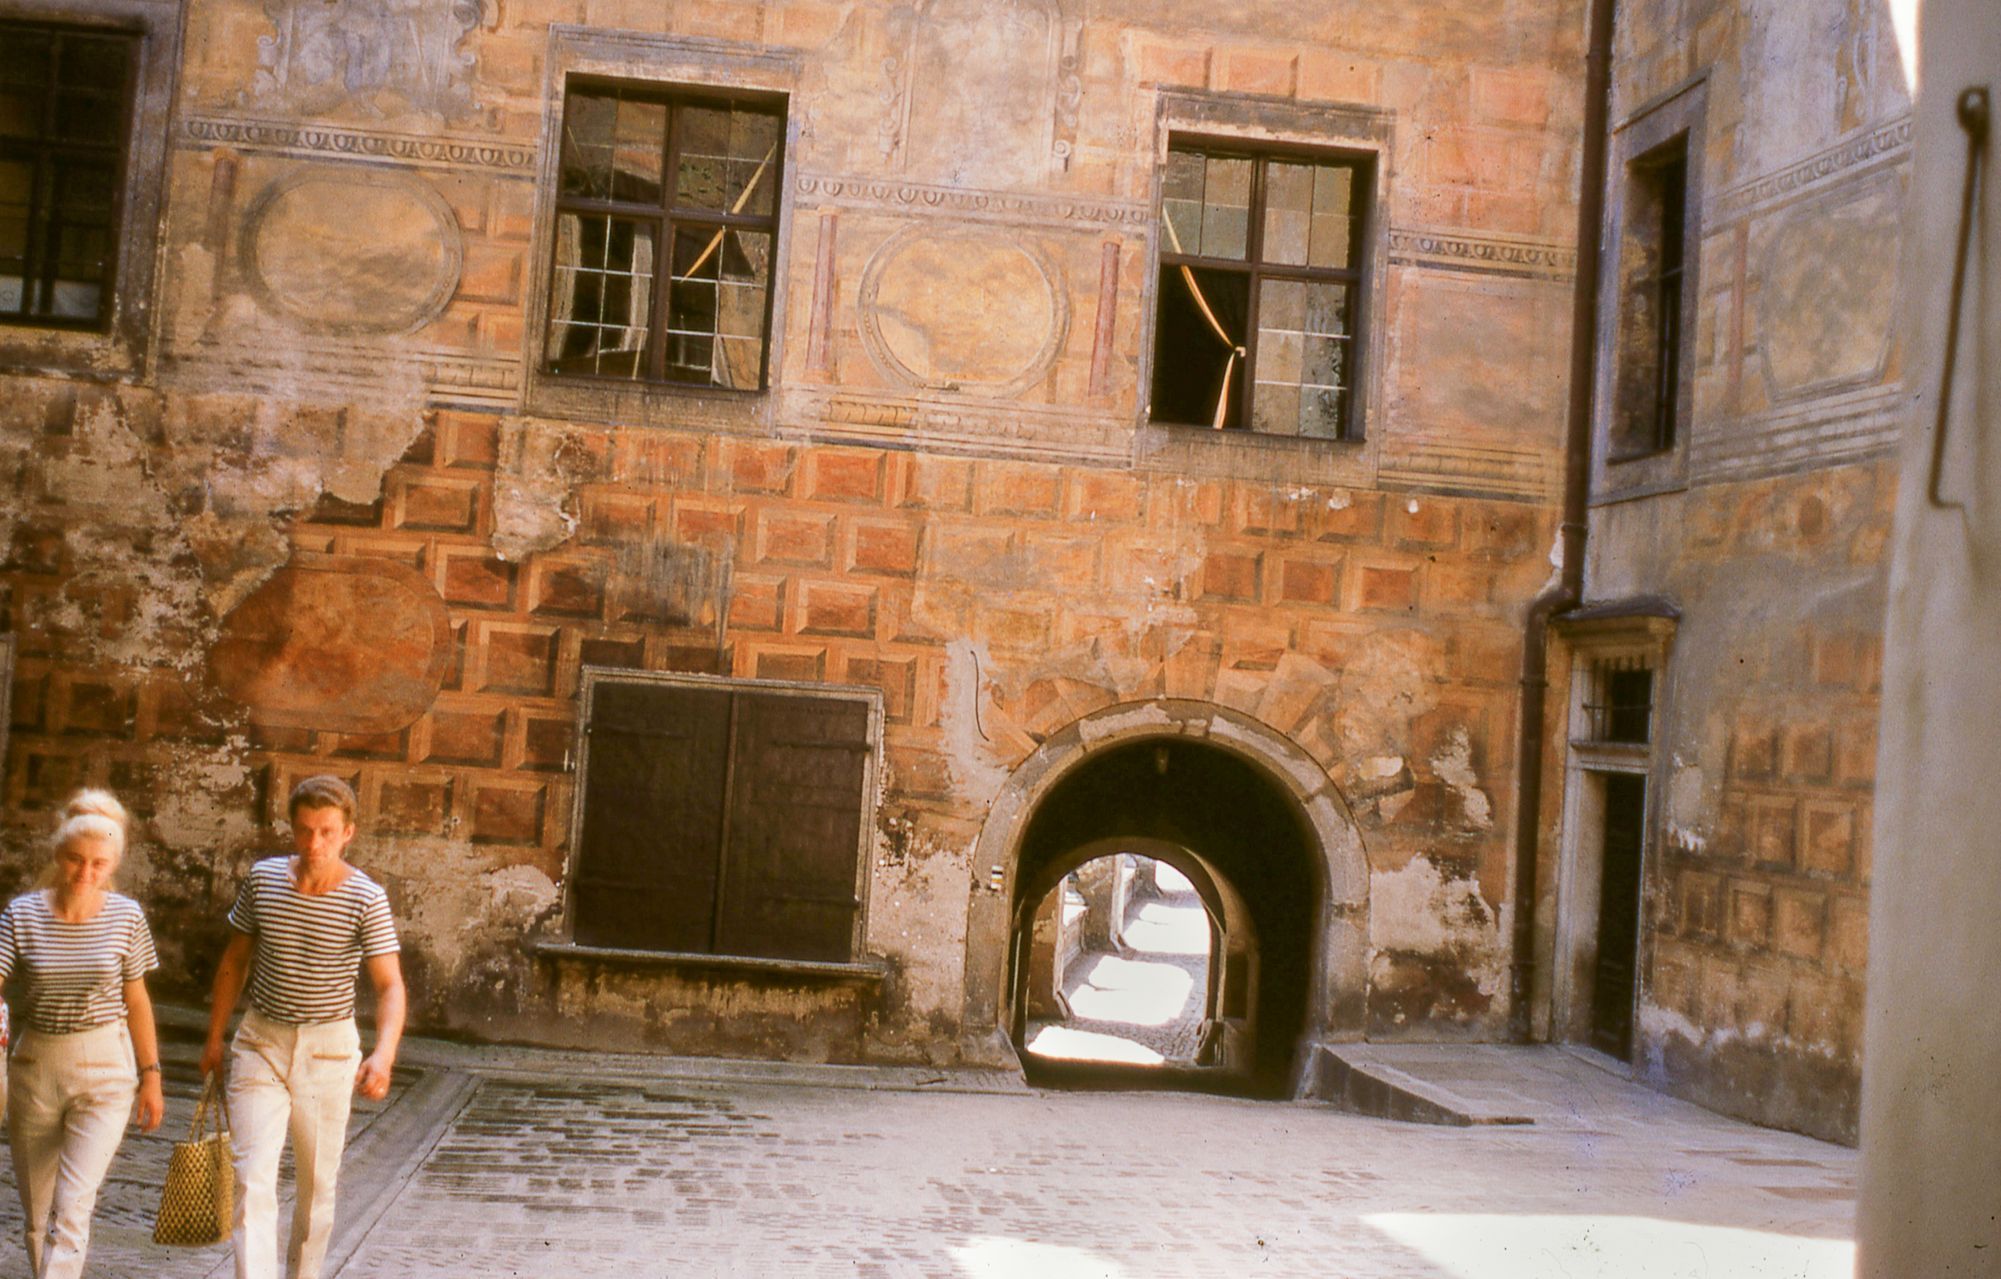 Barevné fotografie, retro, Československo, domácí